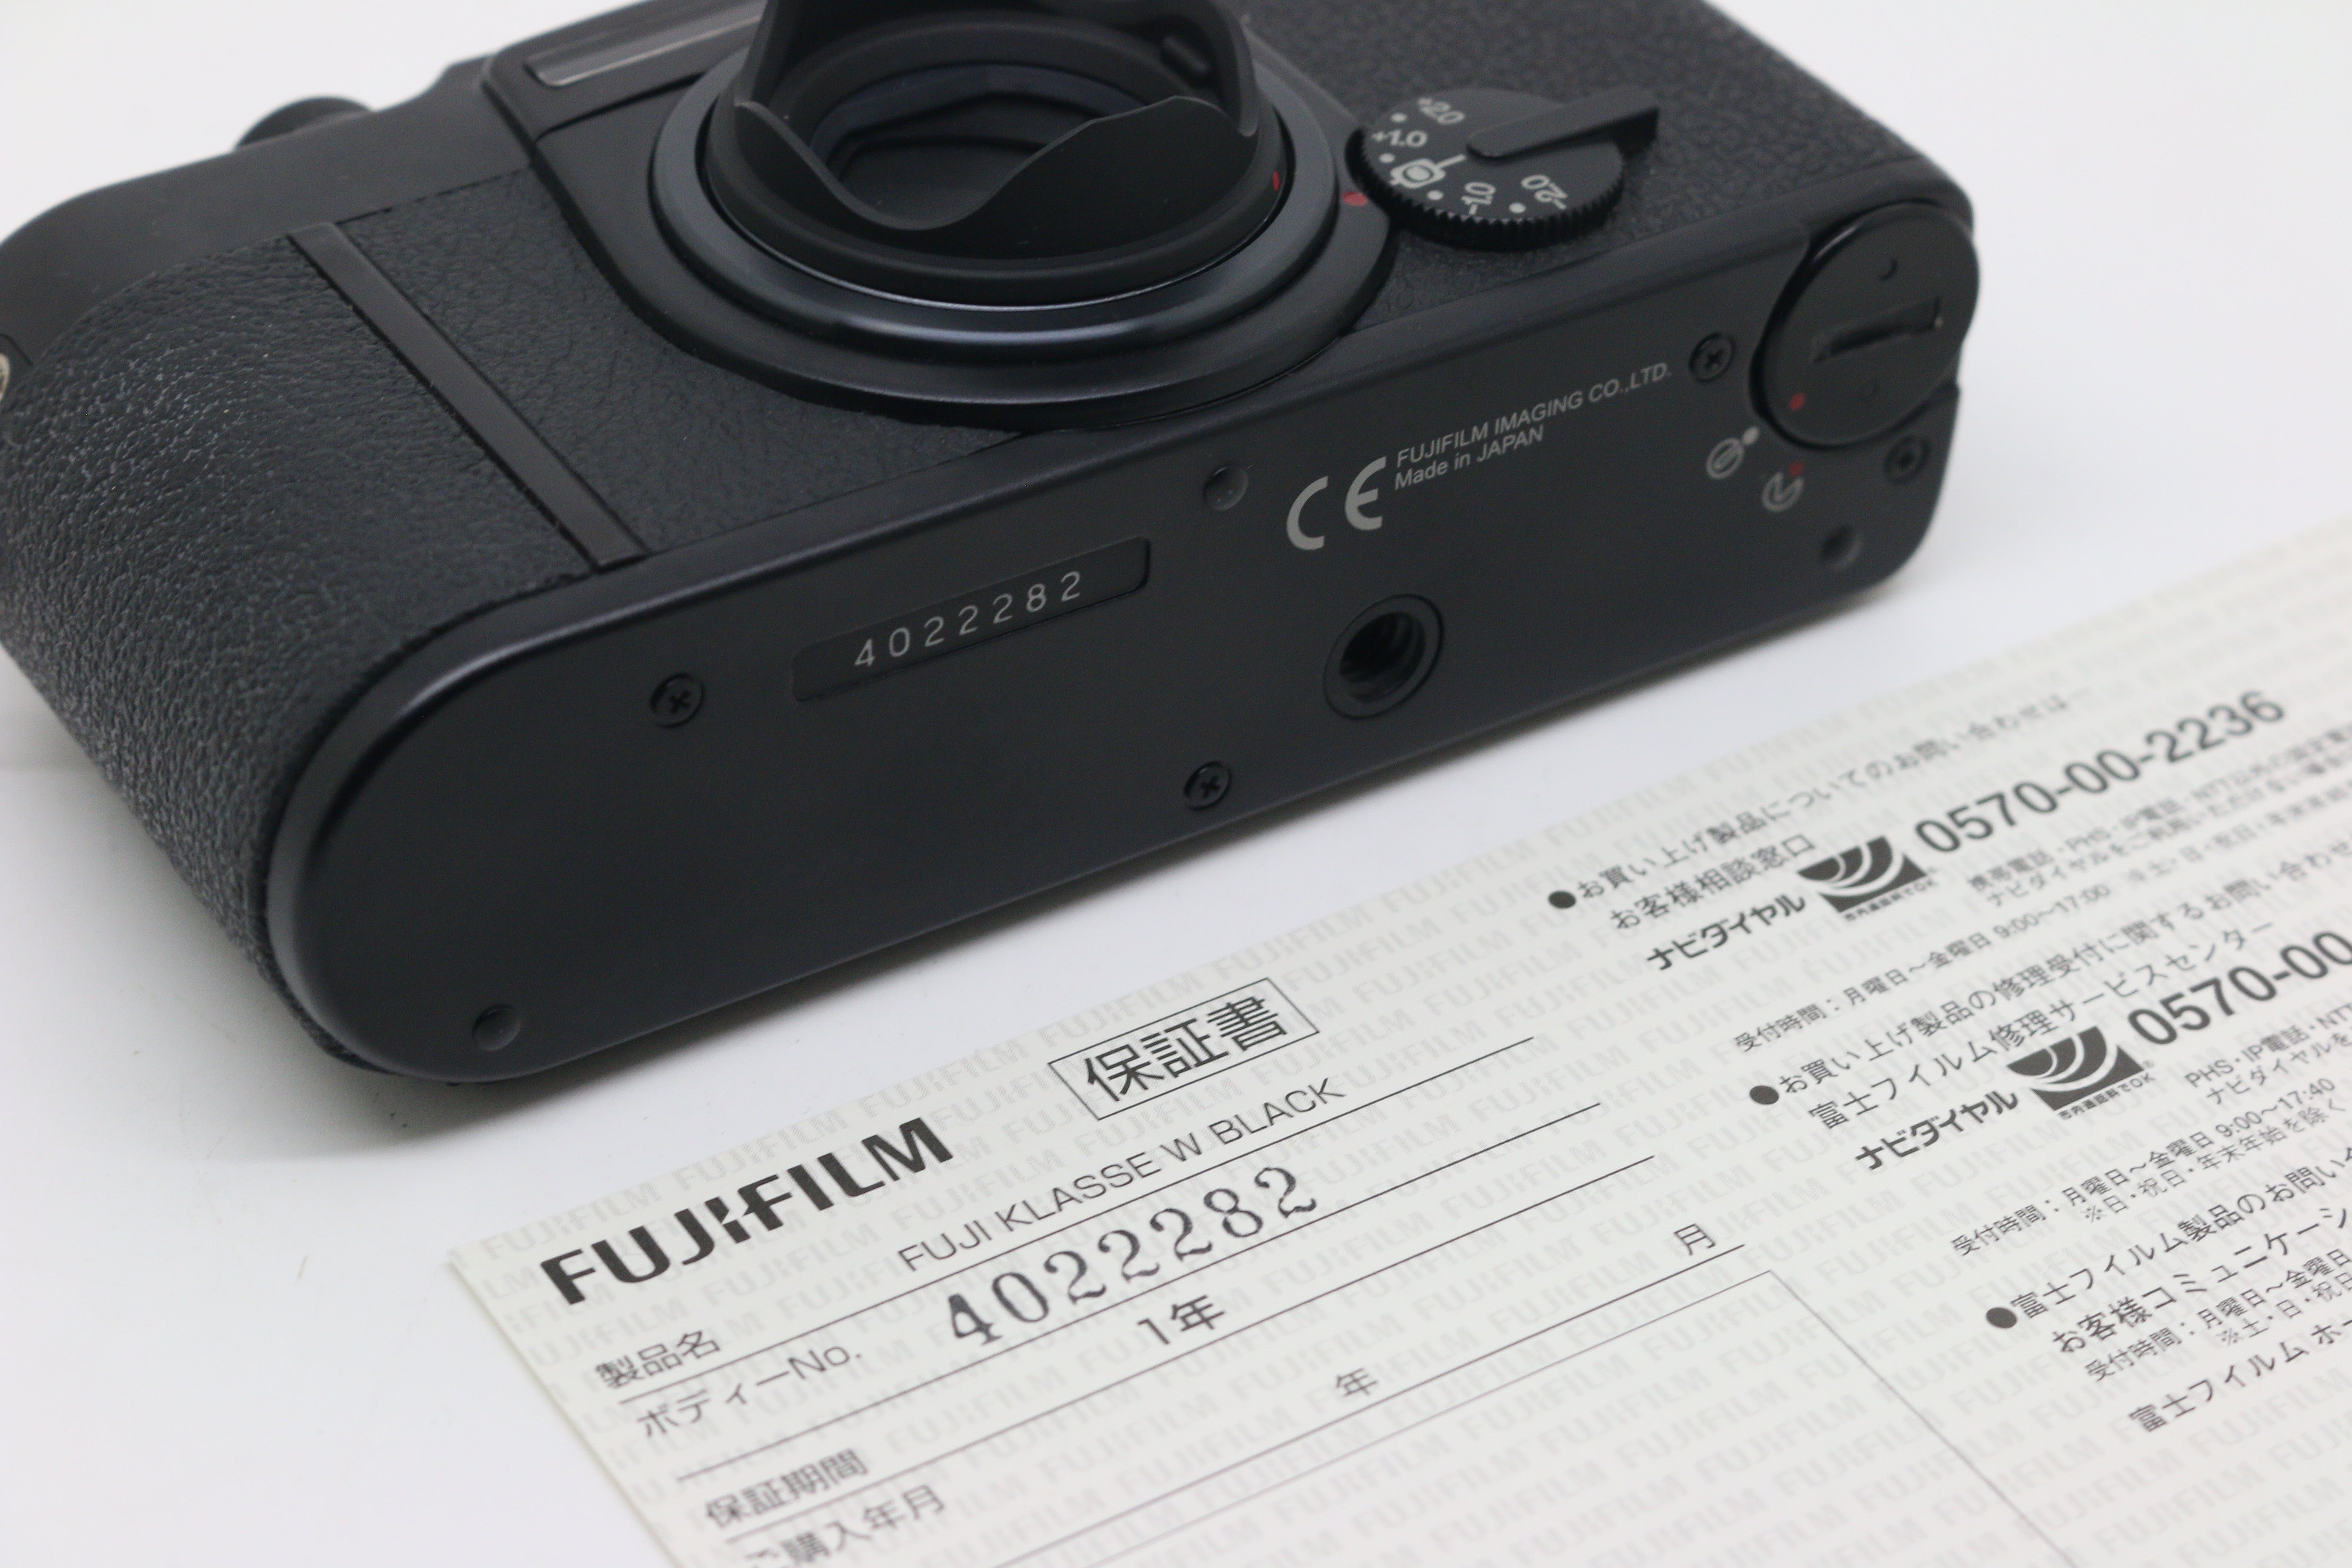 Fujifilm Klasse W (Boxed)